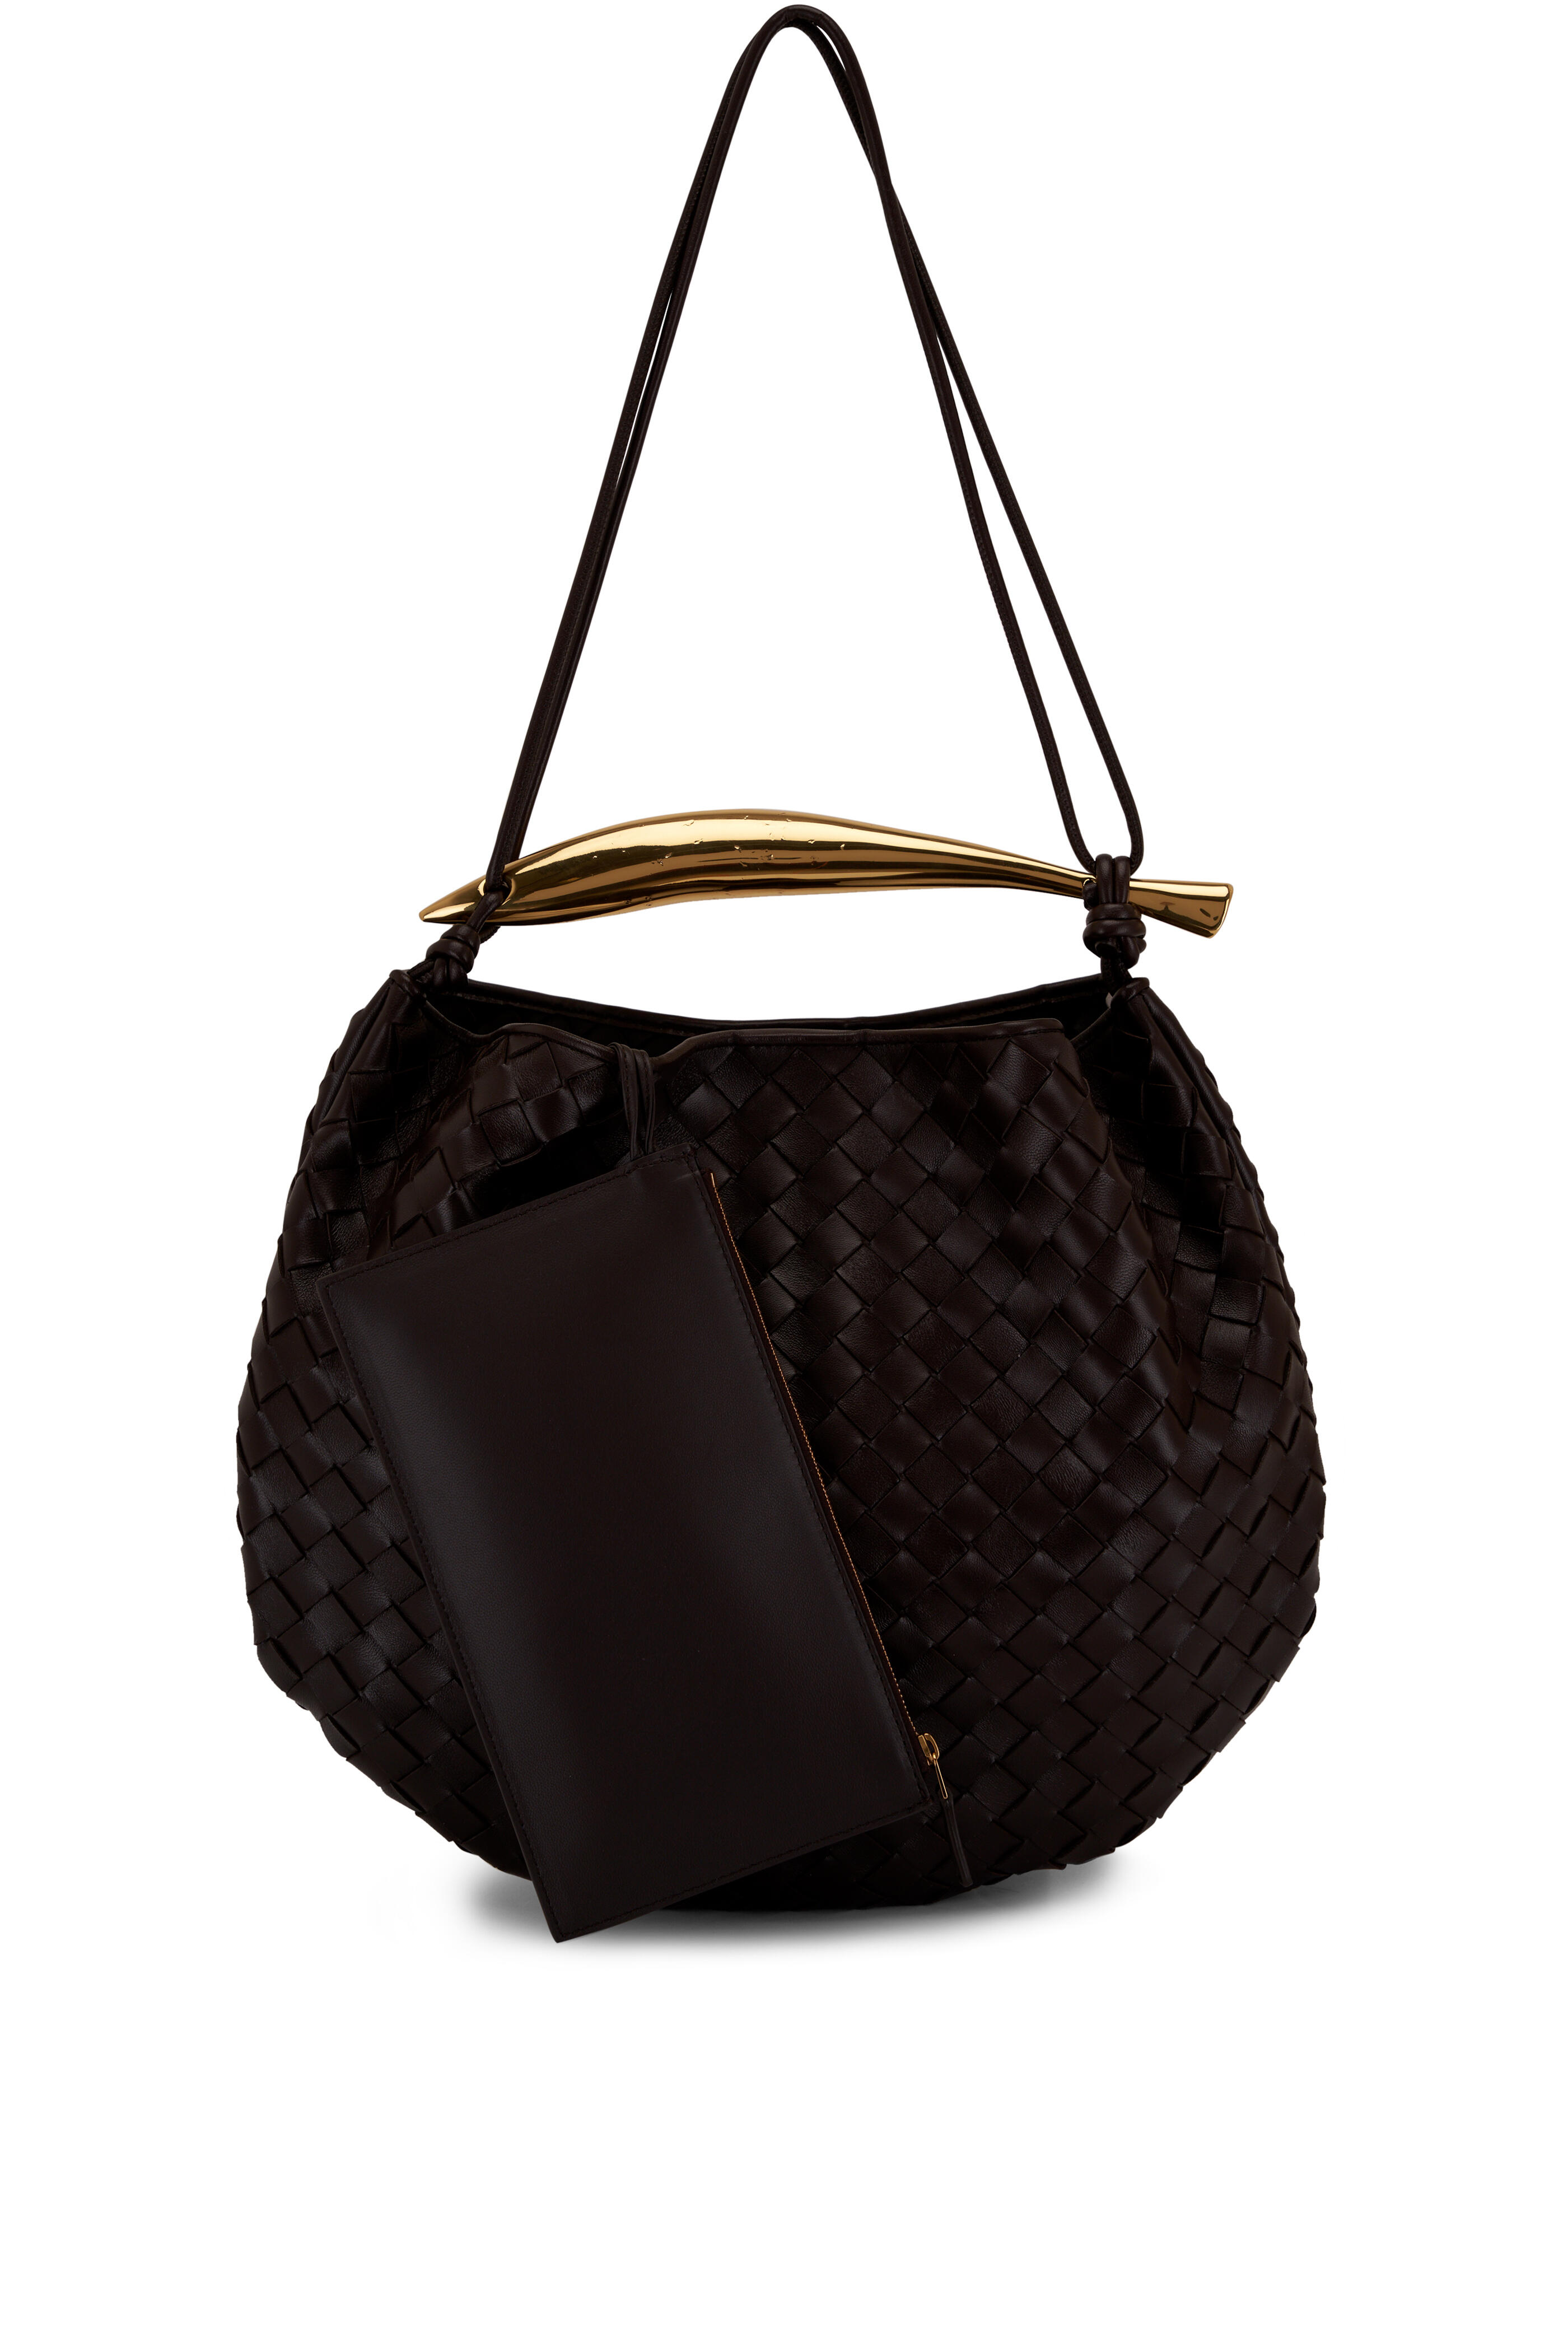 Bottega Veneta Sardine Leather Top Handle Bag In Travertine